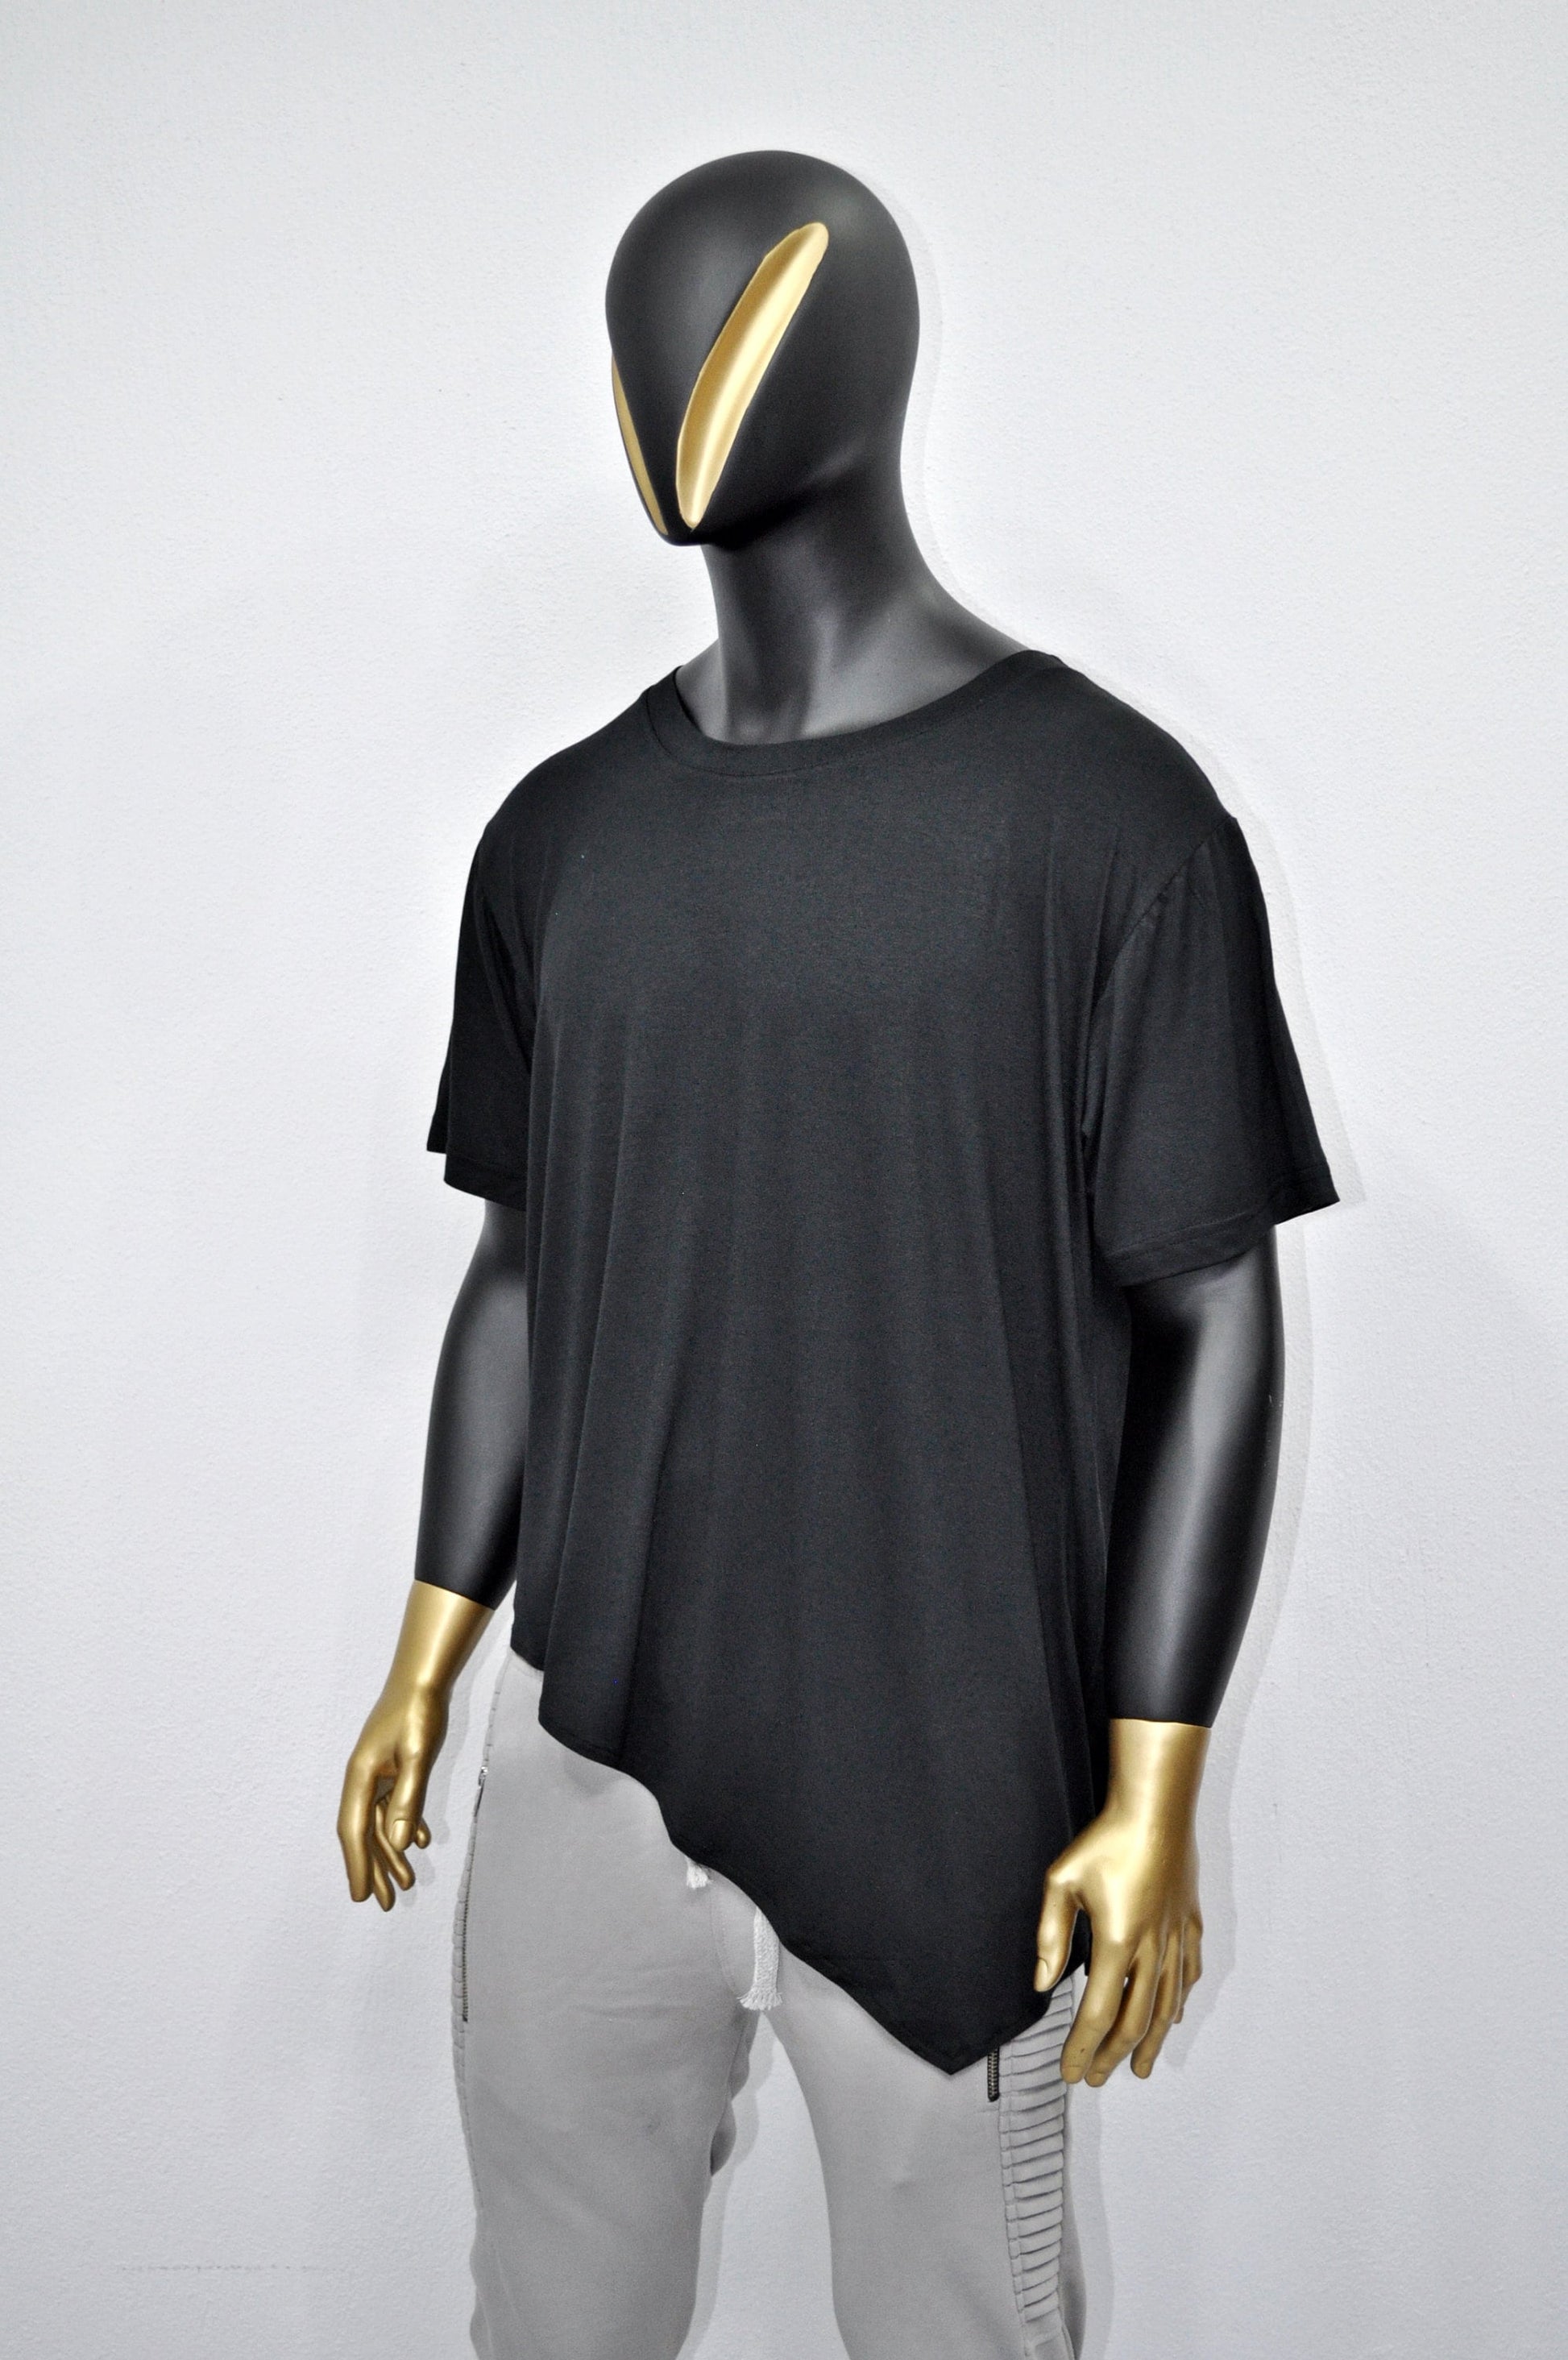 XS-8XL Men's Black T-shirt, Short Sleeve, Geometric Futuristic Top, Loose Viscose Cotton Tee, Summer Festival Halloween Essentials-BB500E